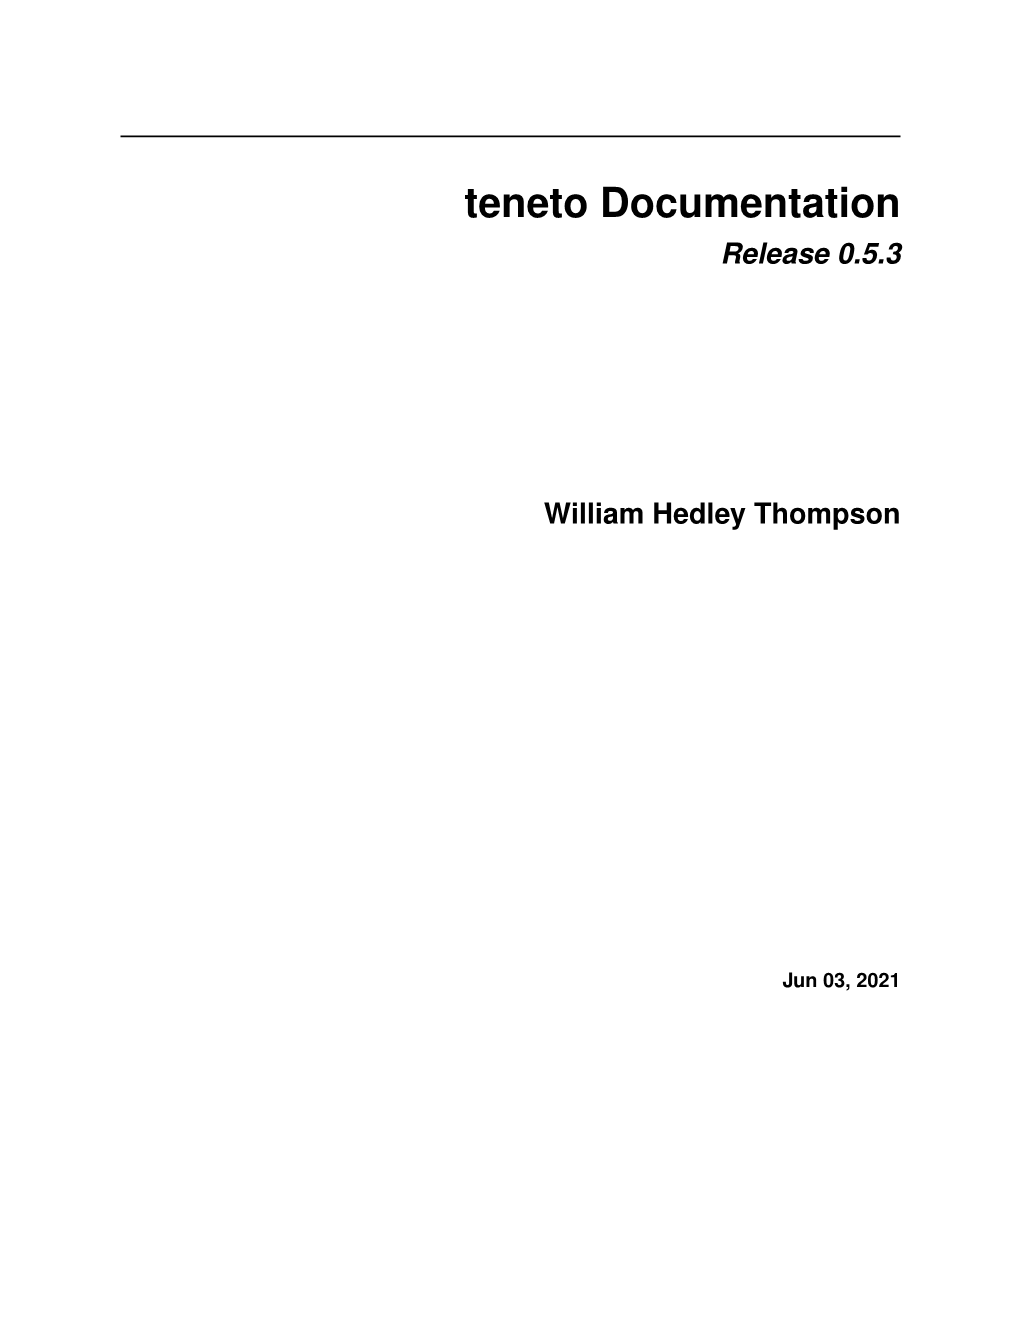 Teneto Documentation Release 0.5.3